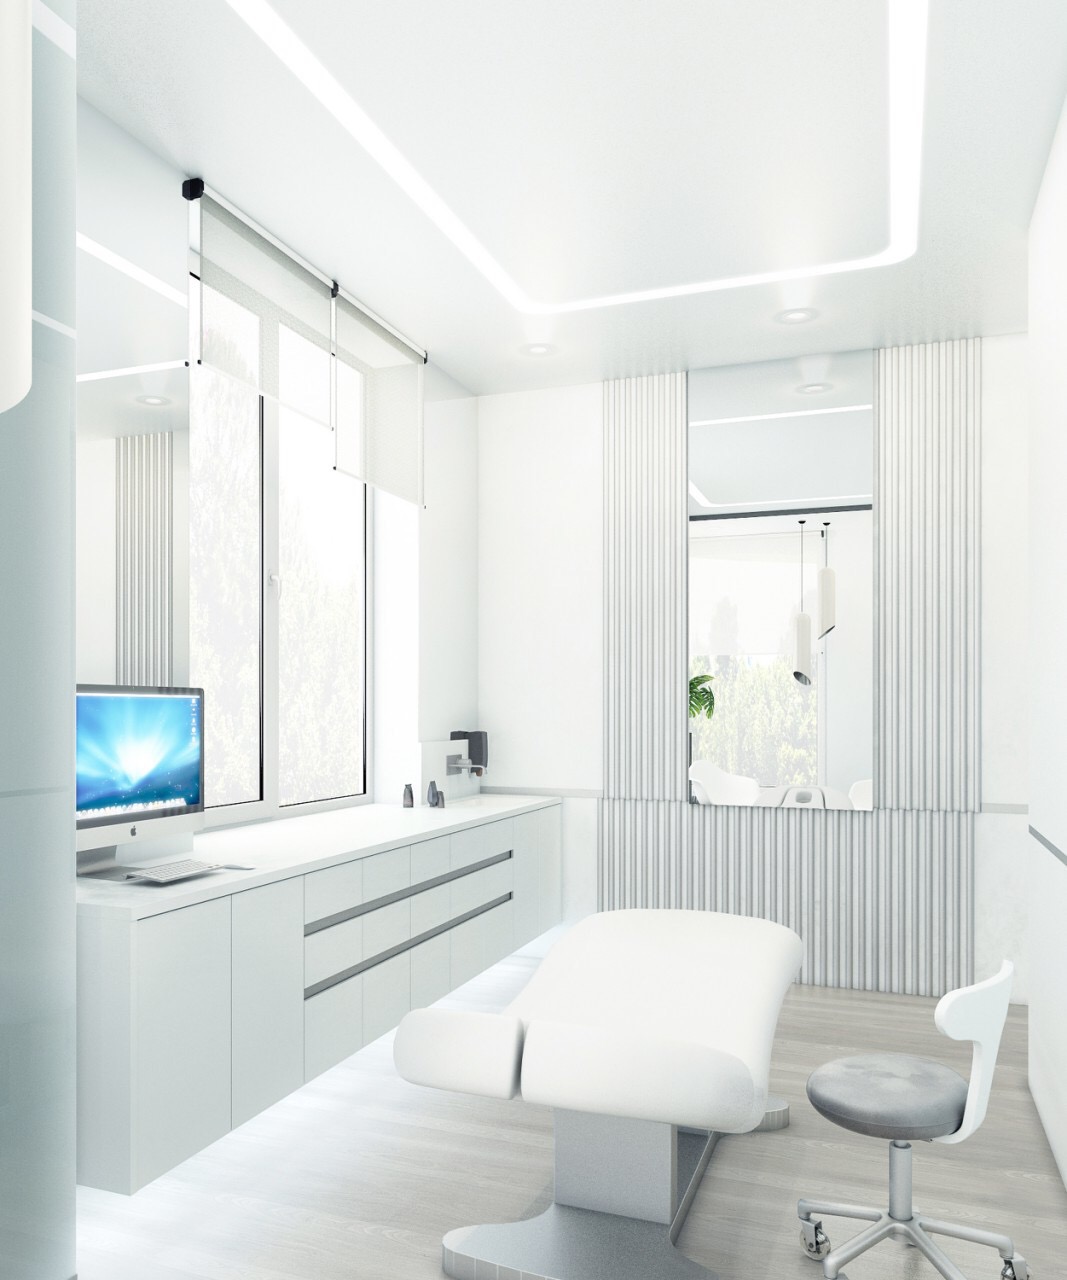 Interior Design Clinic in Kiev on Behance